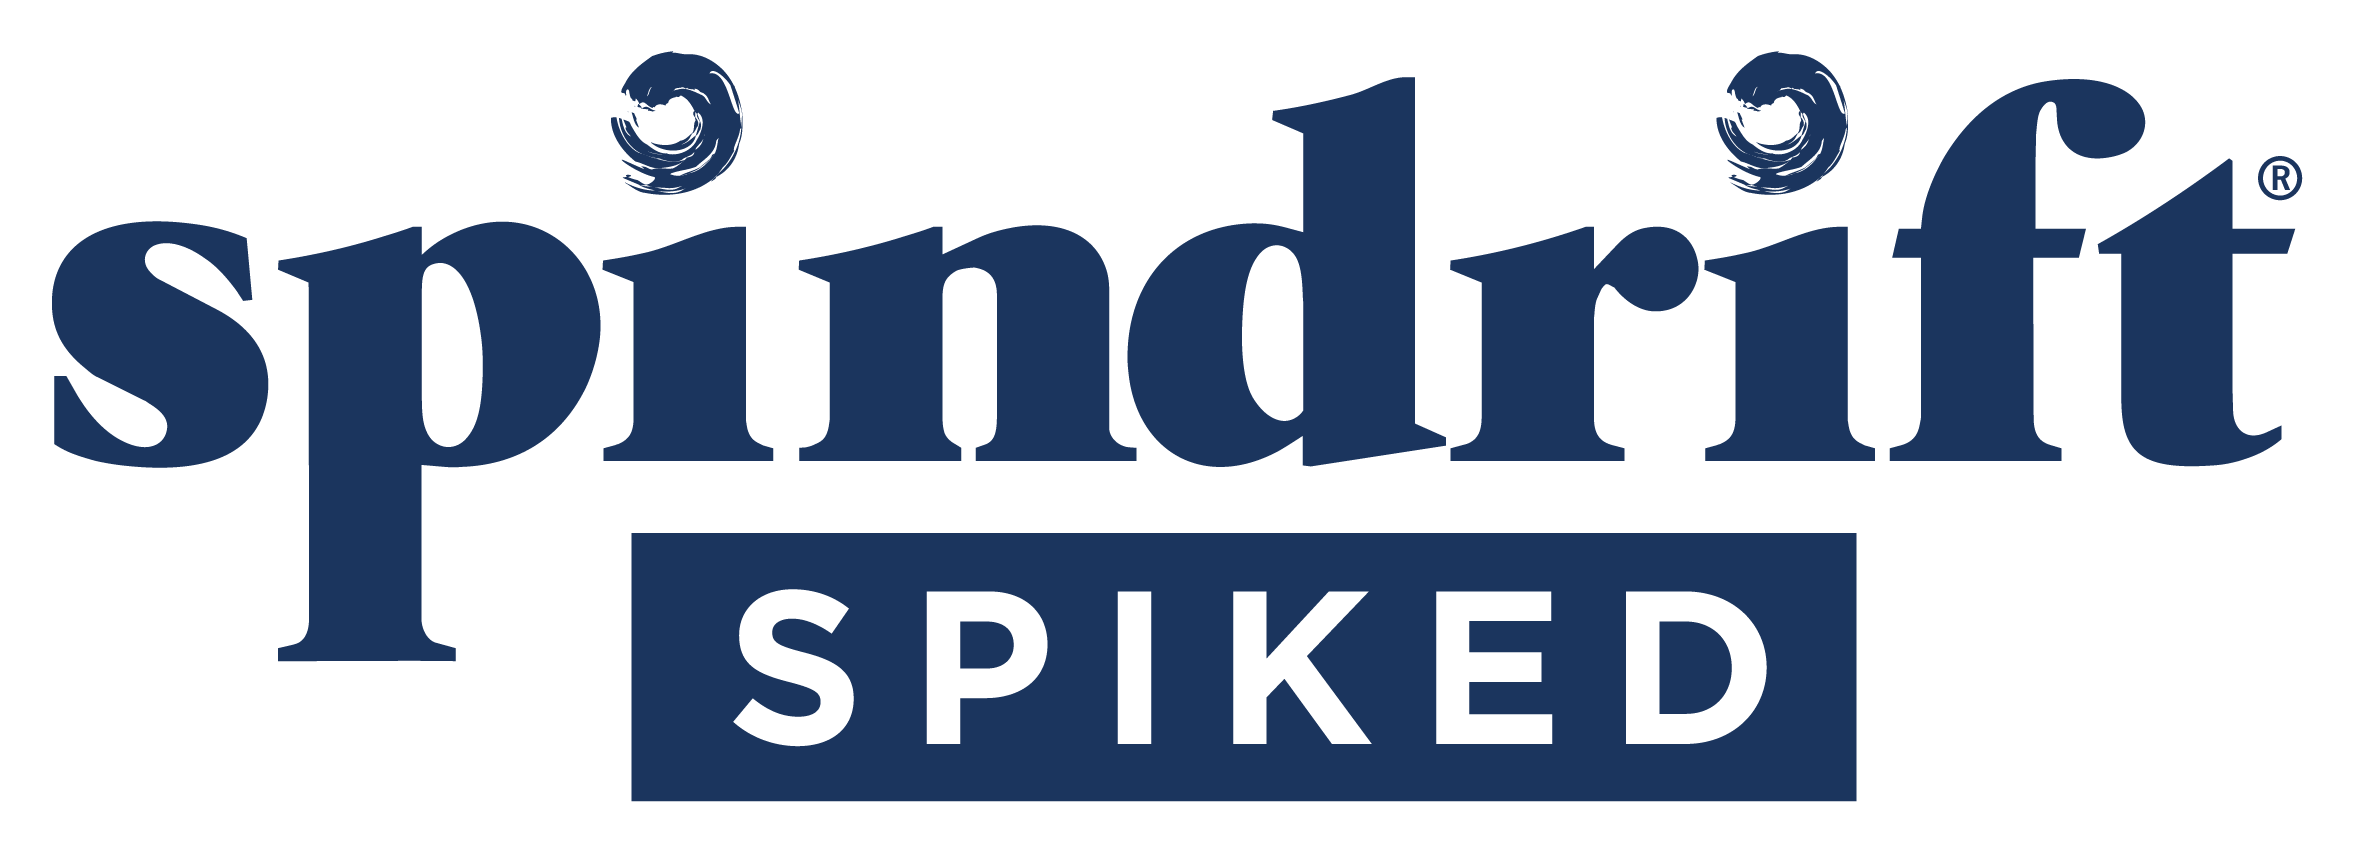 Spindrift Spiked - Logo Lock_Navy-01